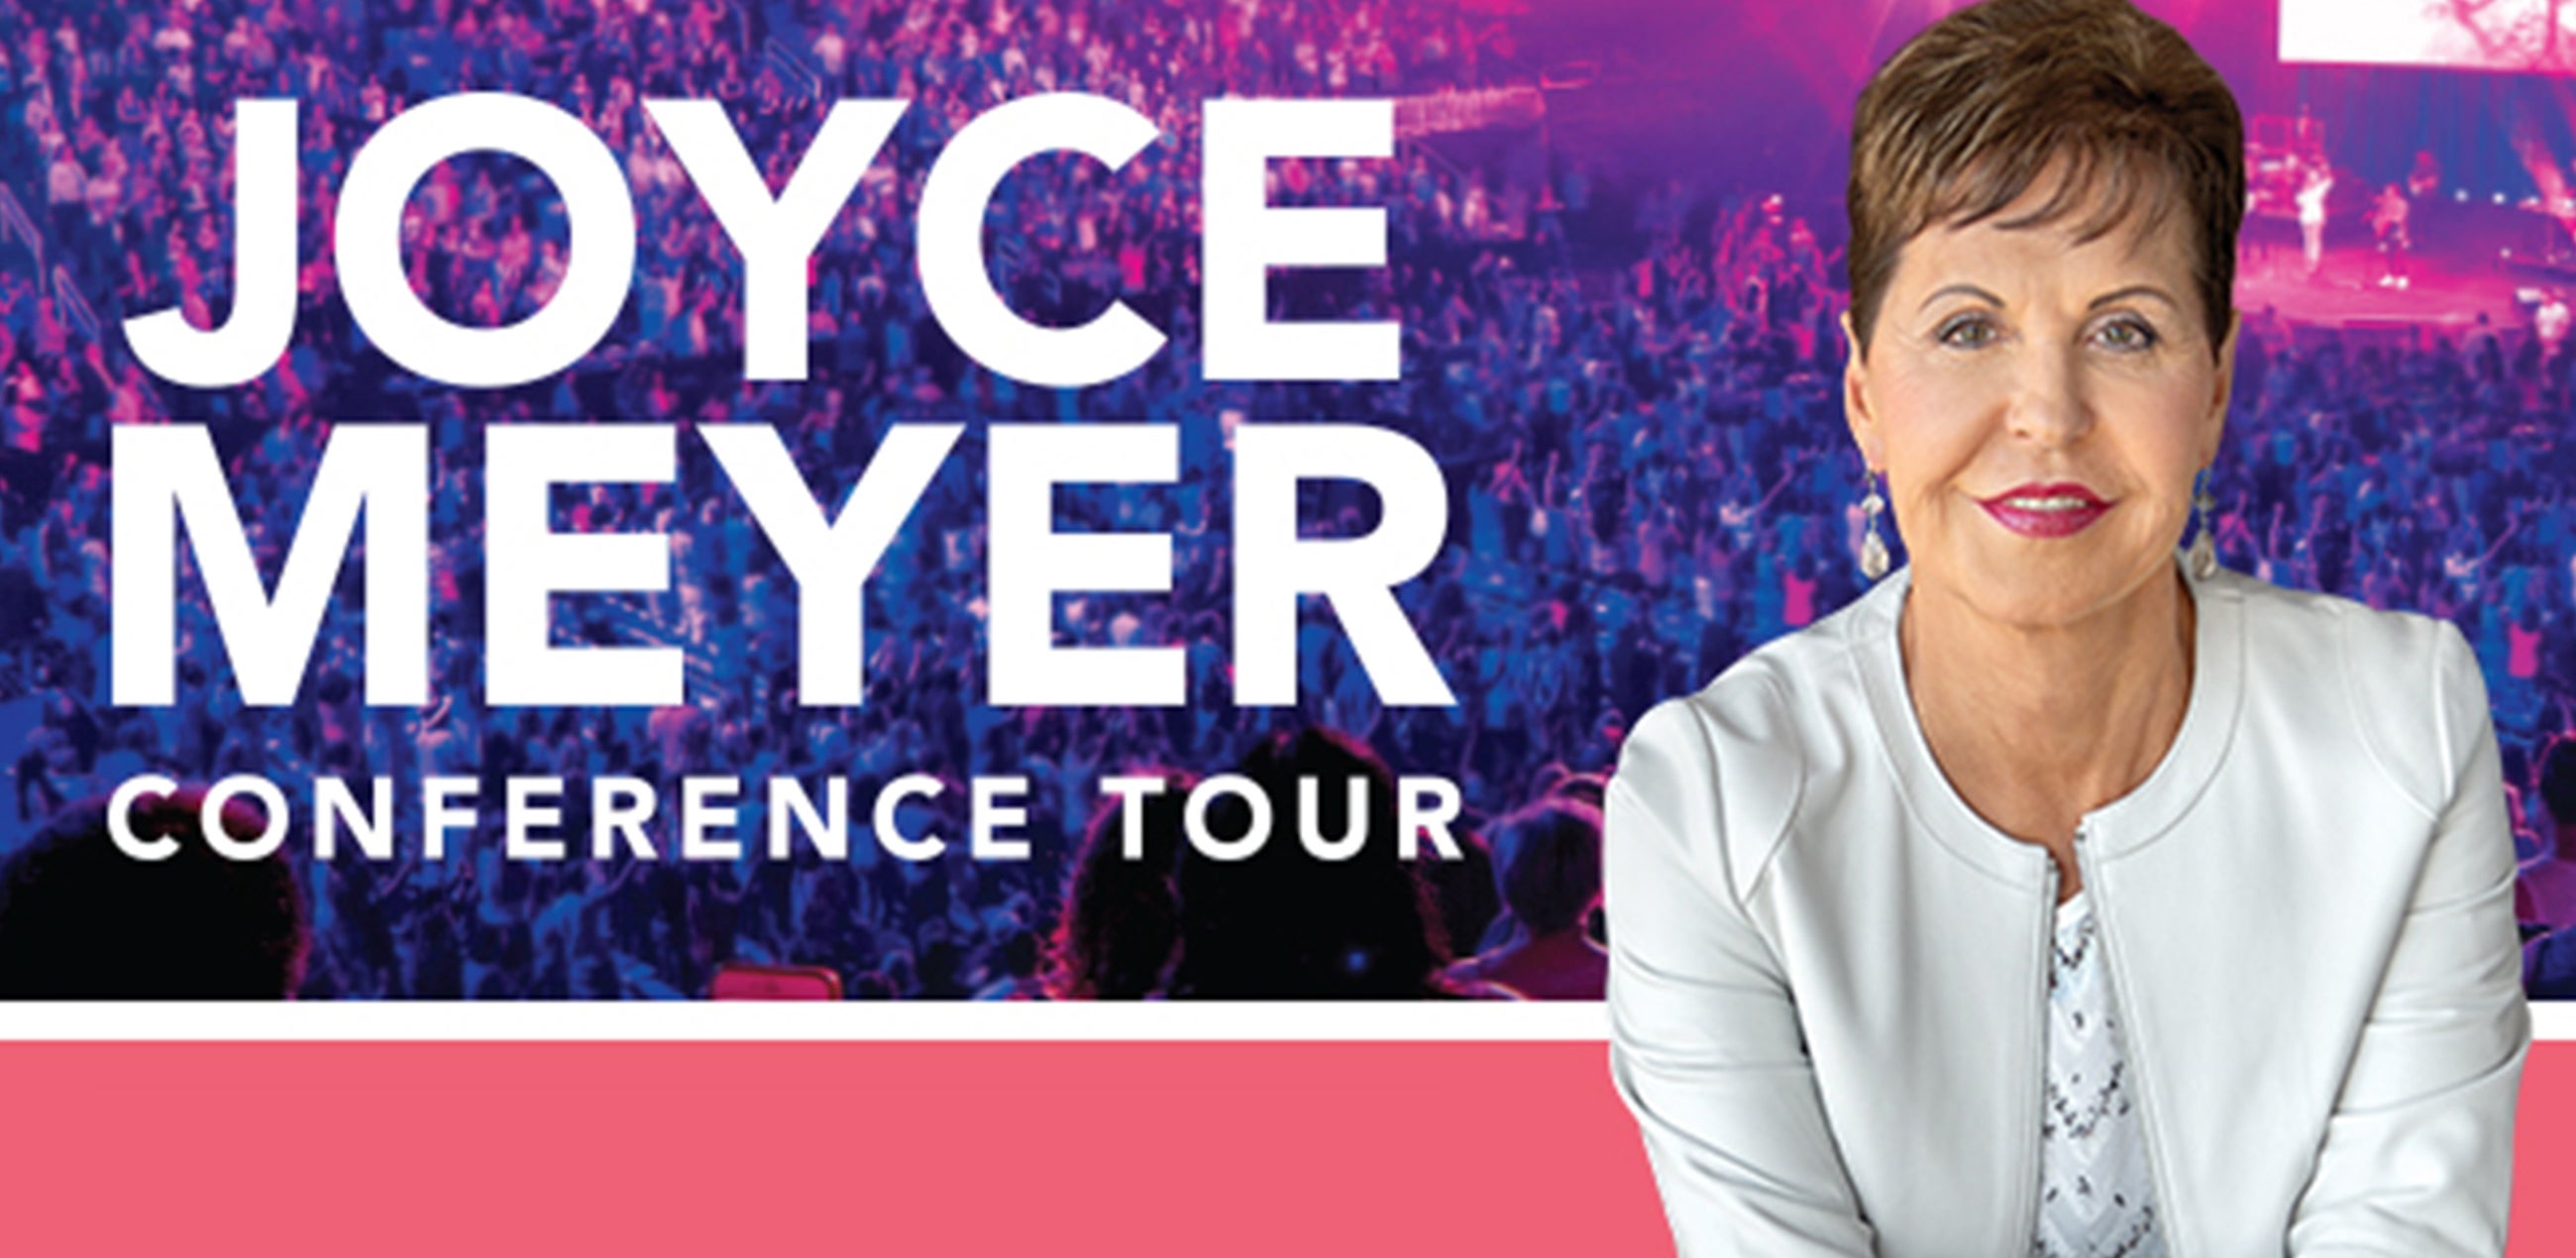 Joyce Meyer Conference Tour 2020 | H-E-B Center